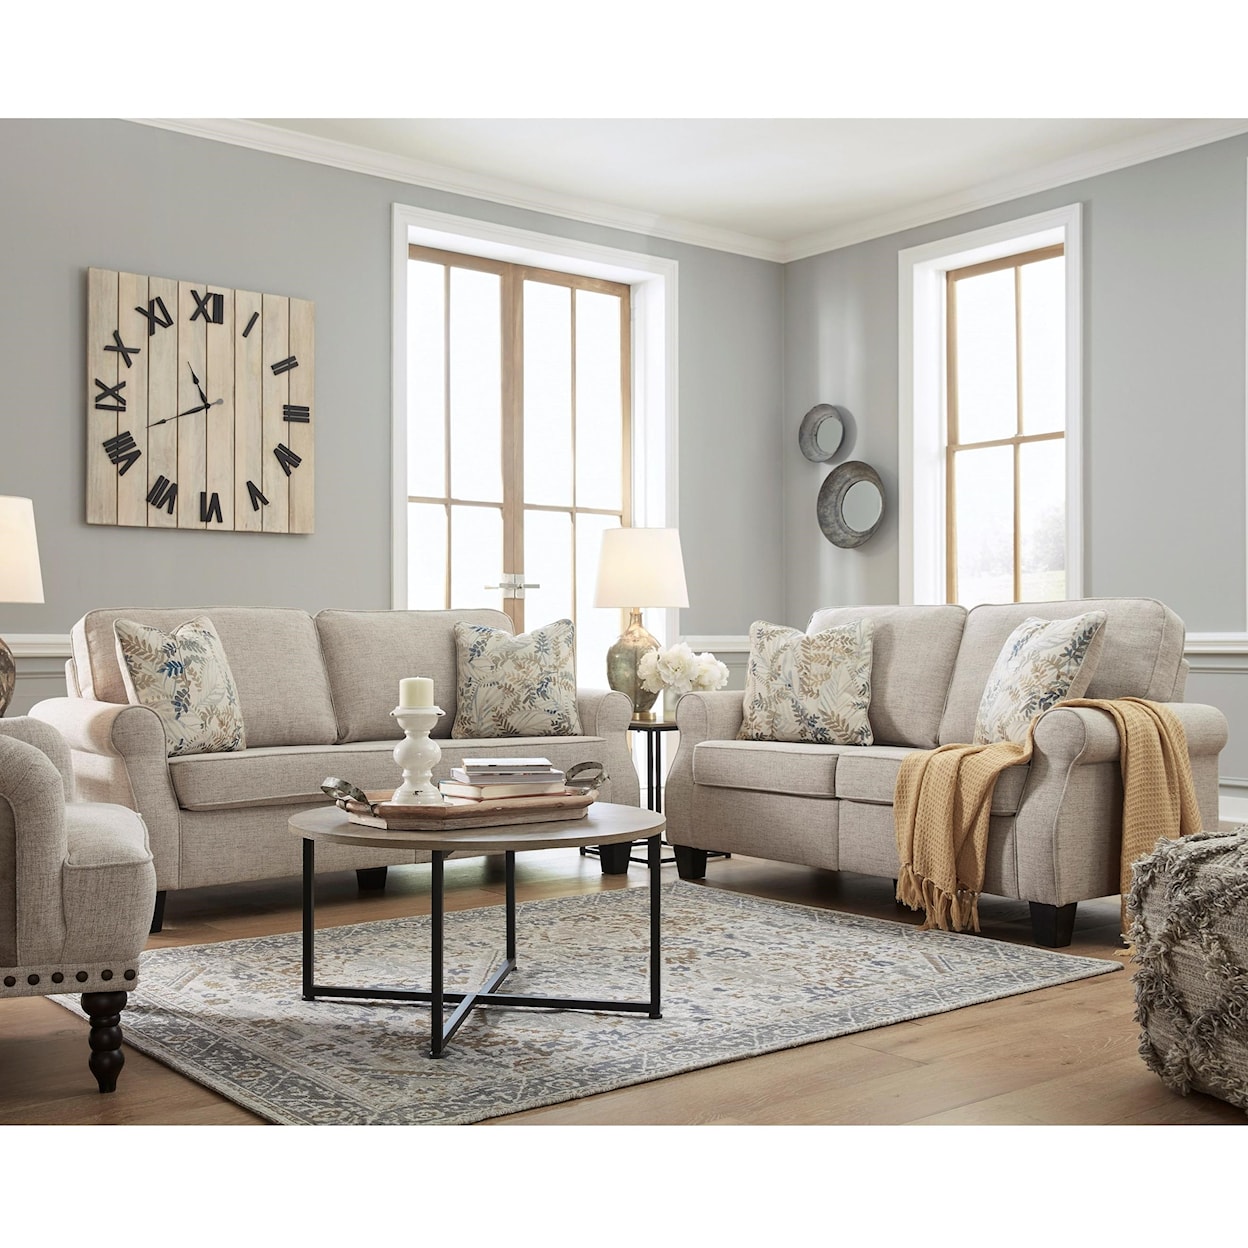 Ashley Furniture Signature Design Alessio Living Room Group